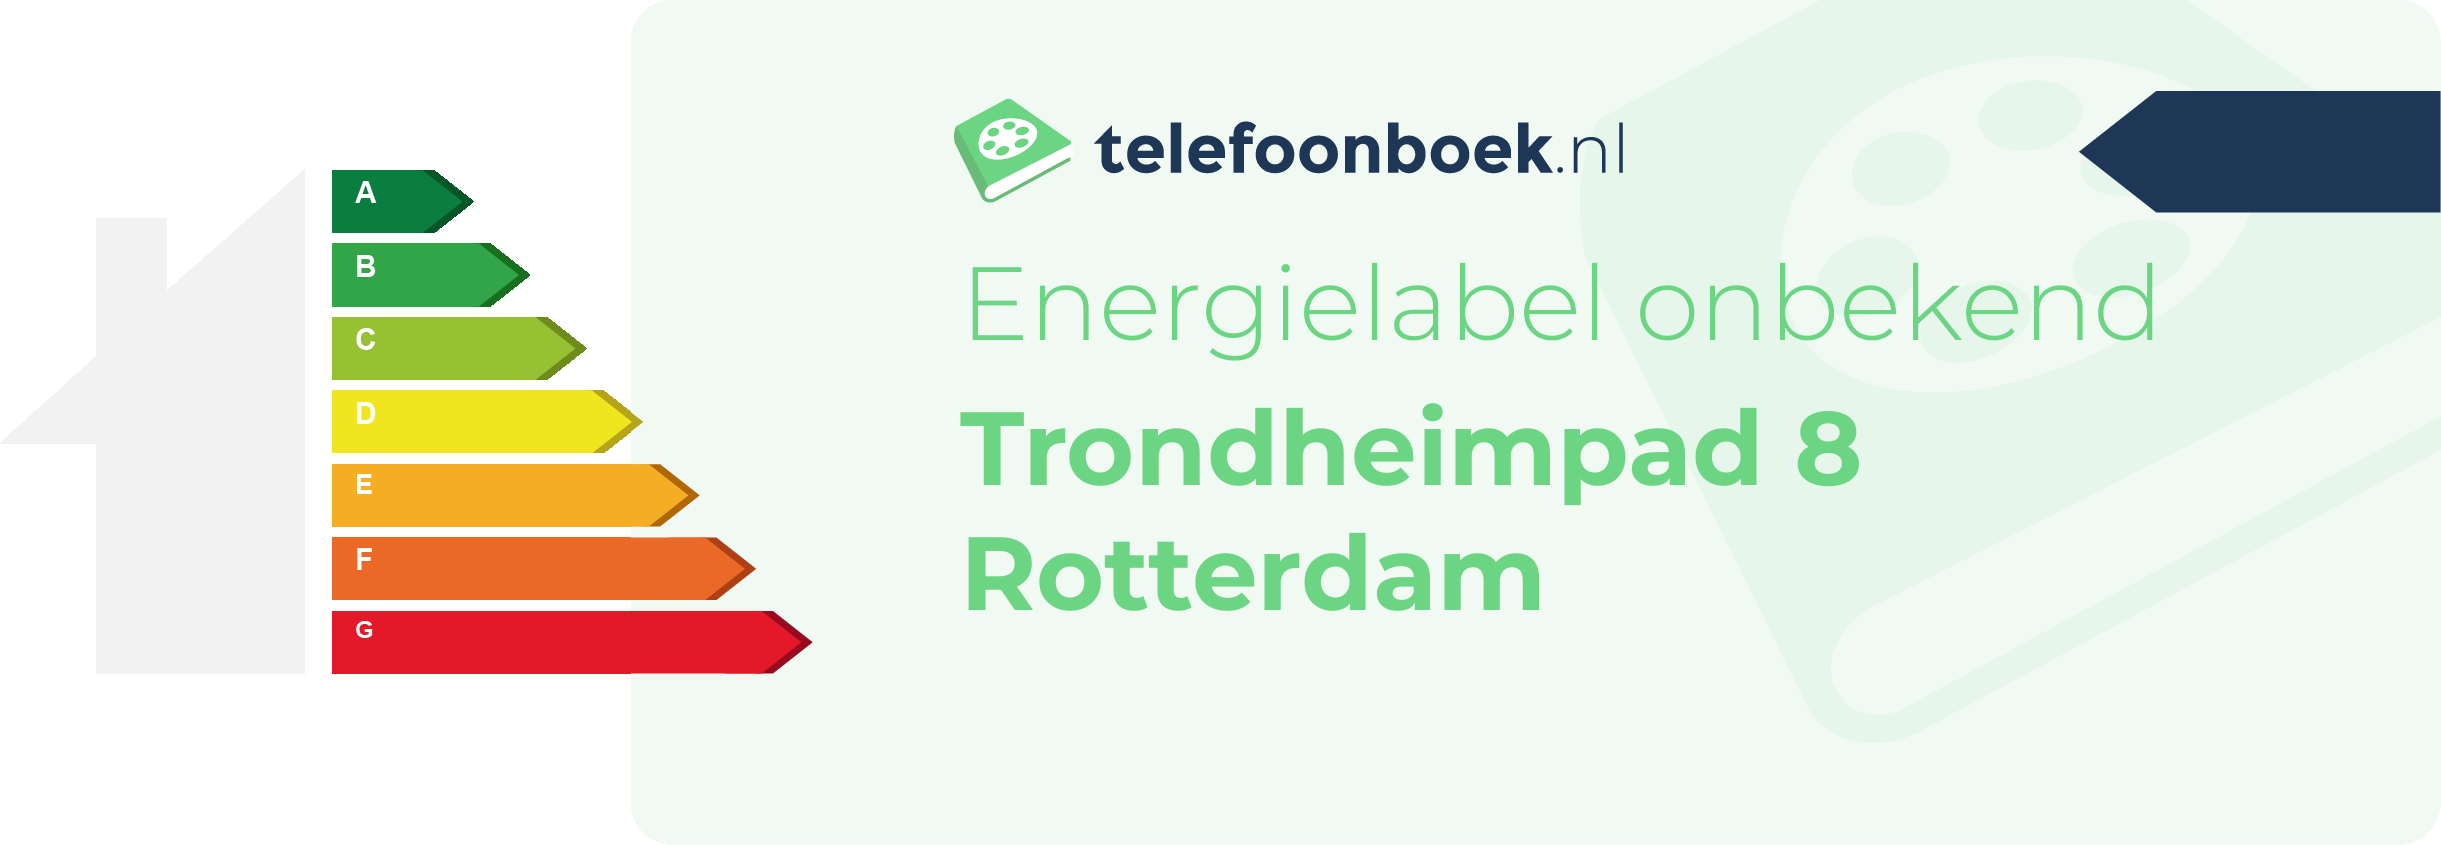 Energielabel Trondheimpad 8 Rotterdam